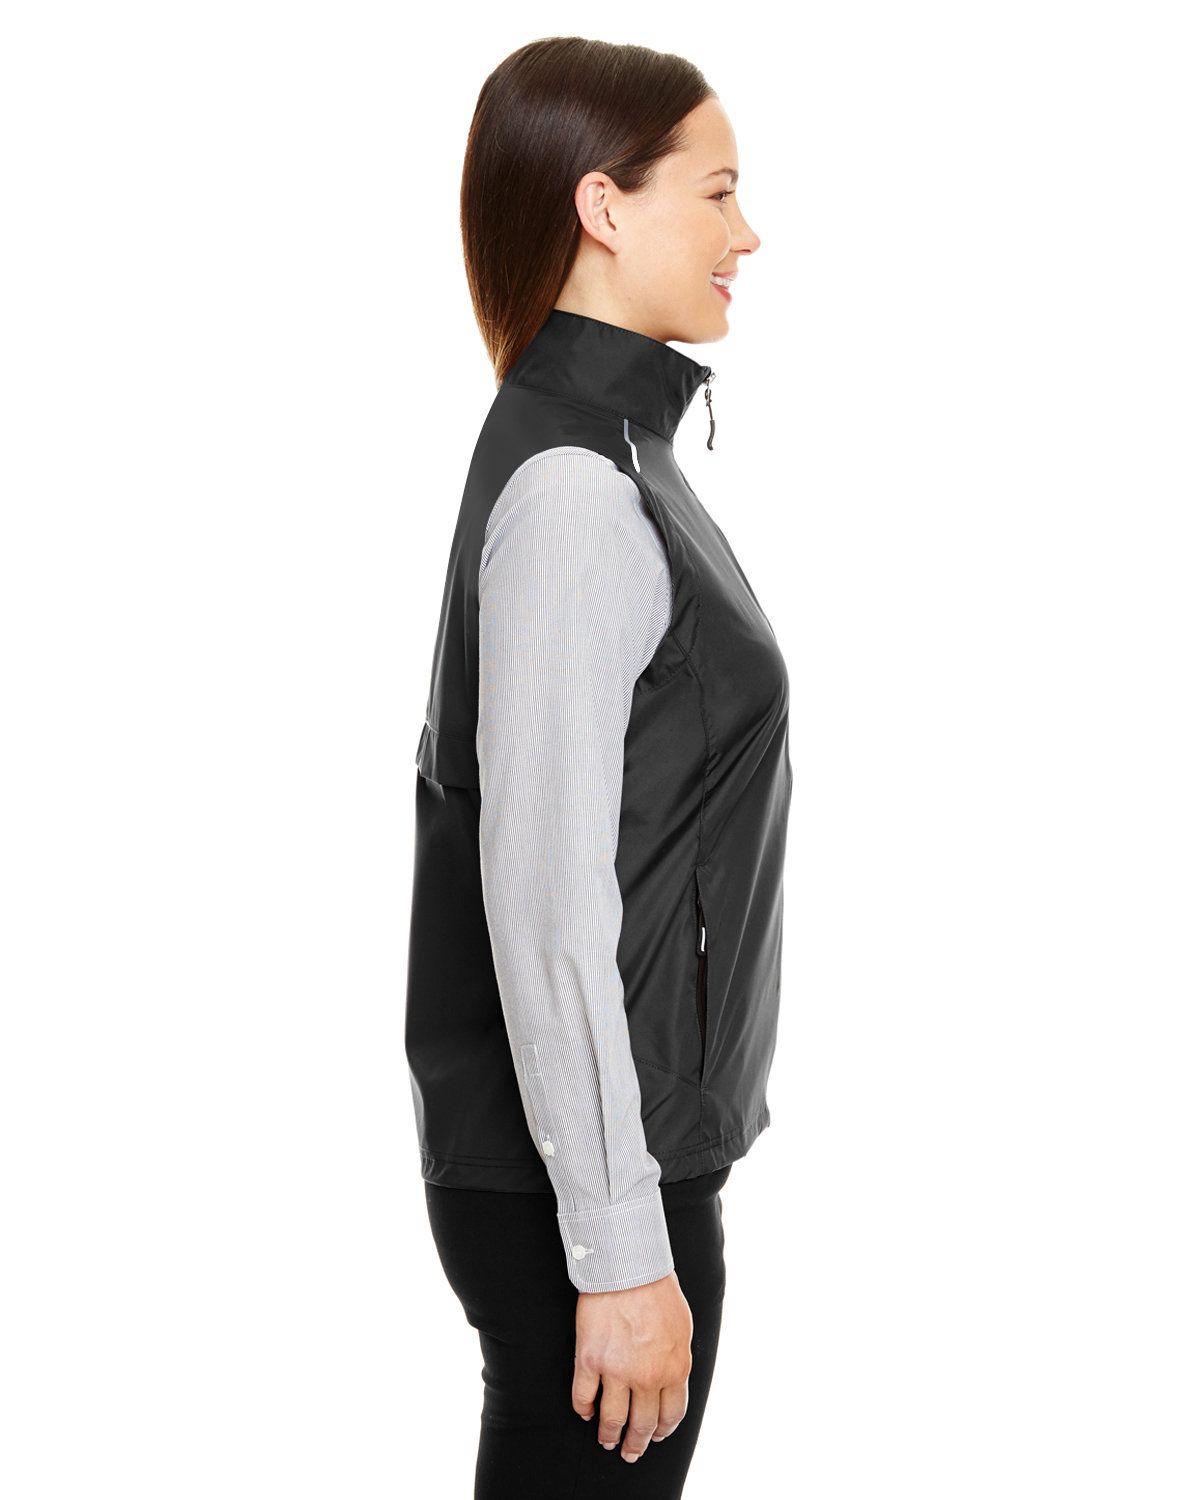 'Core365 CE703W Women's Techno Lite Unlined Vest'